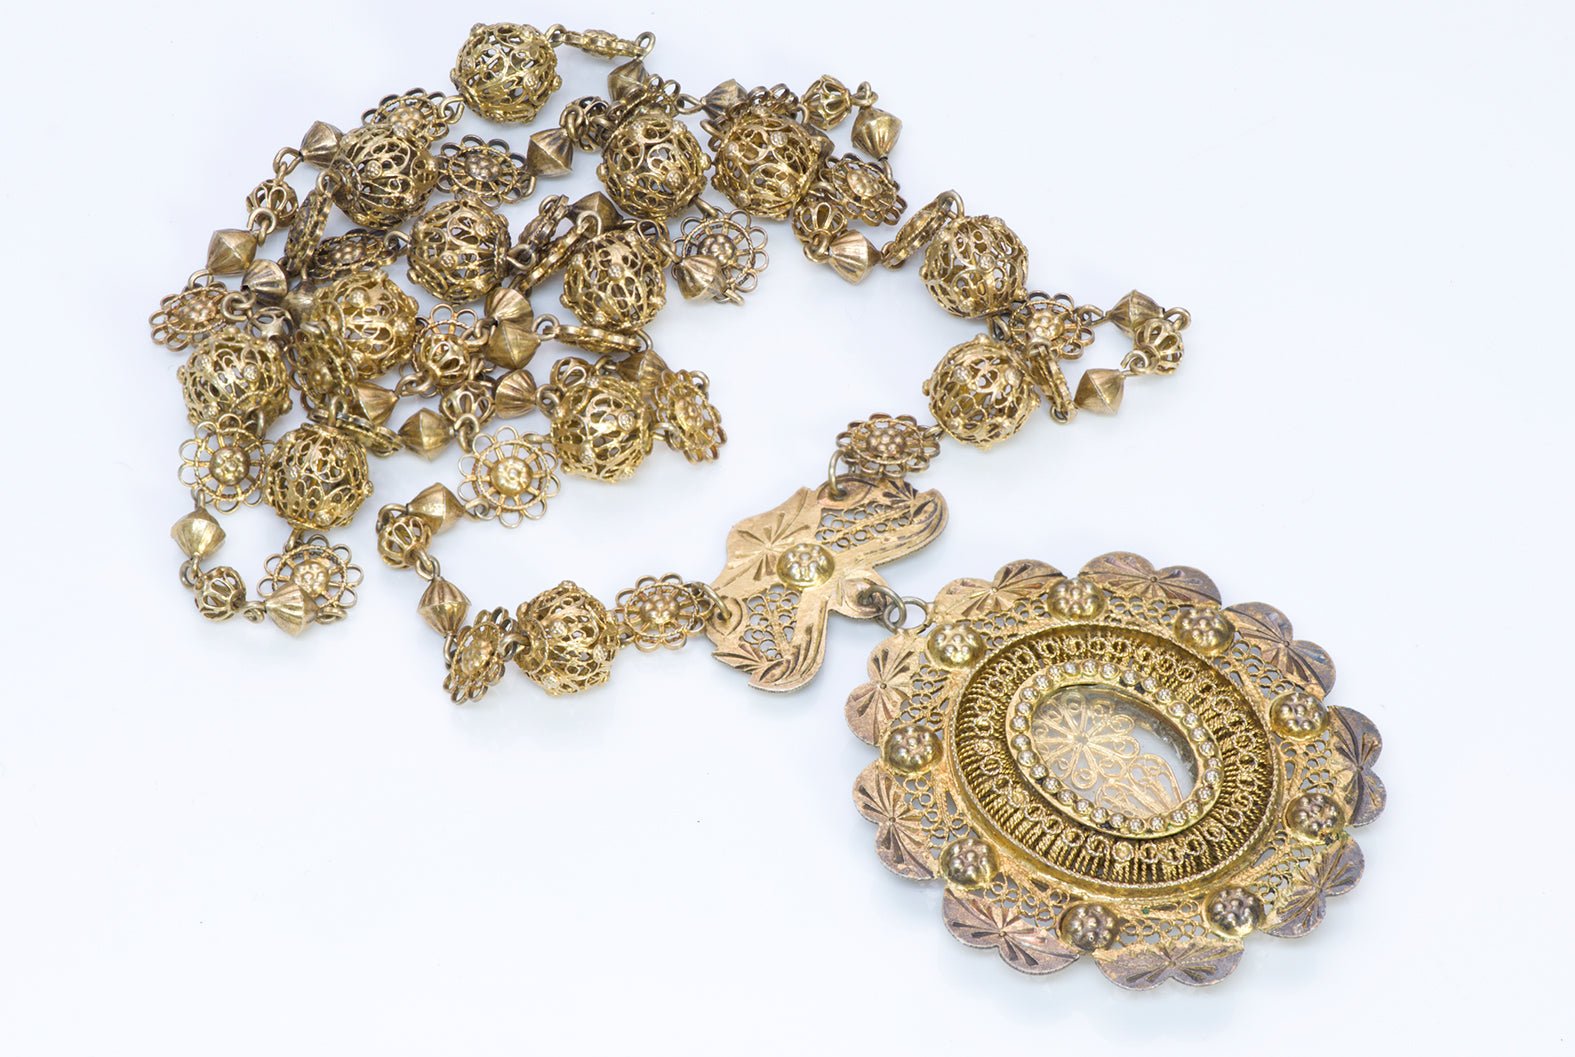 Antique Victorian Spanish Colonial Silver Gilt Filigree Necklace Pendant